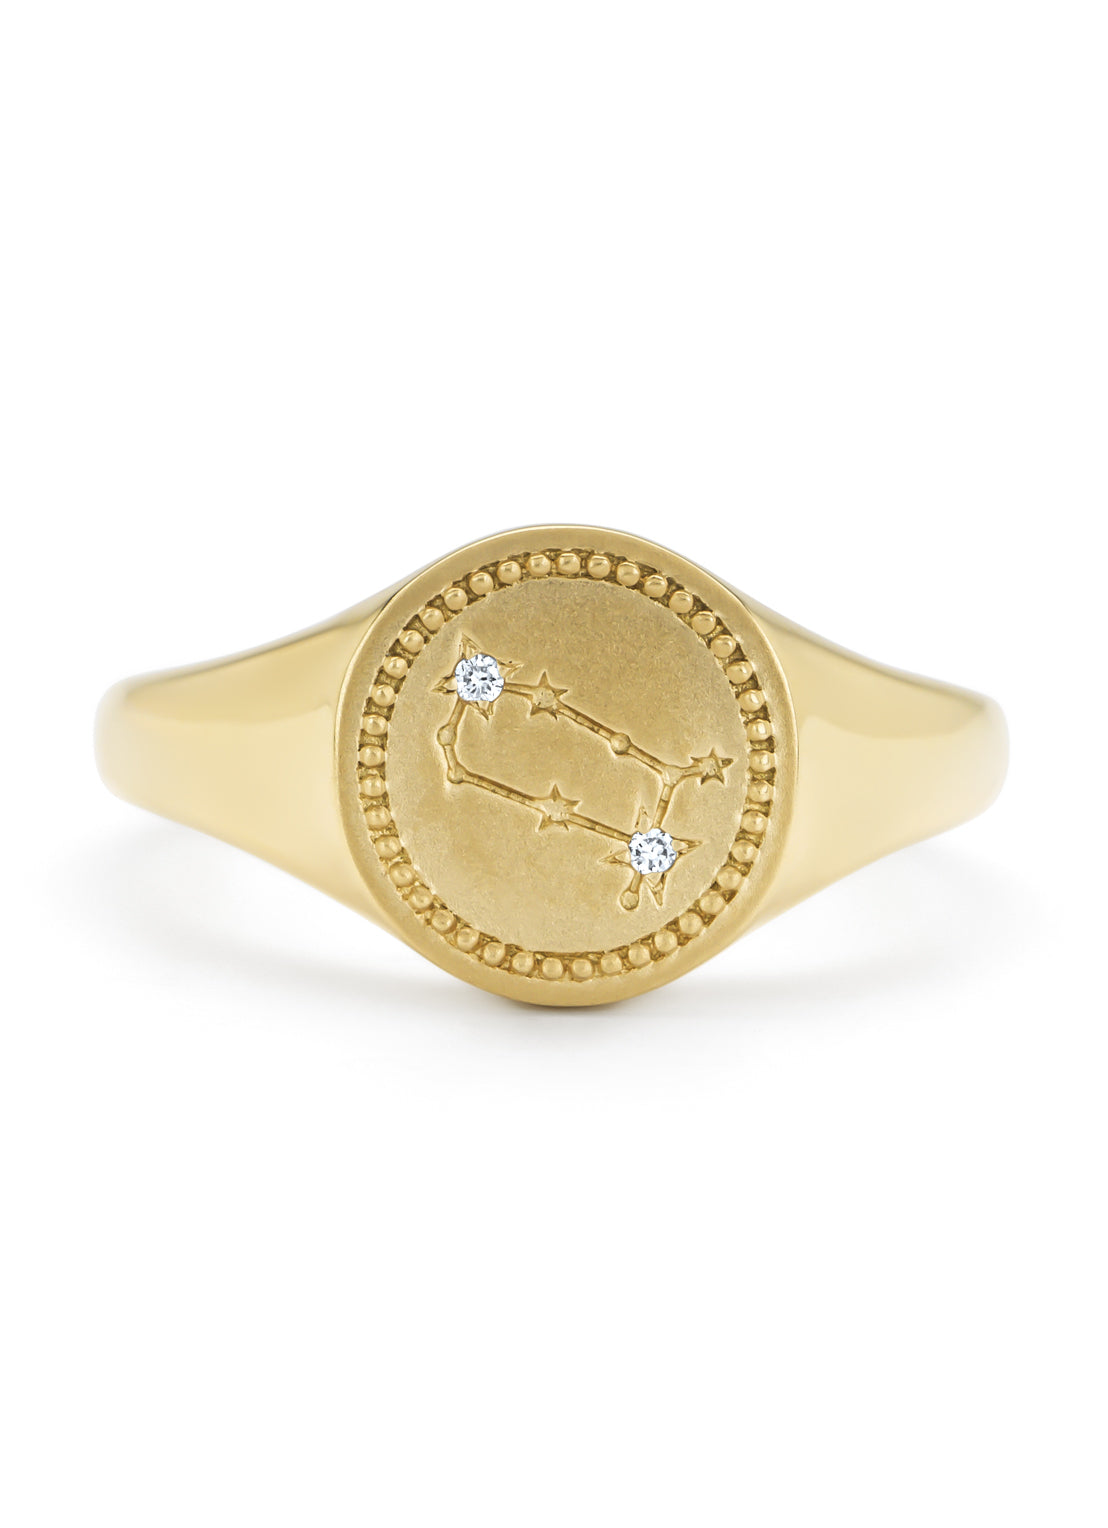 Yellow gold signet ring, zodiac-gemini (twins)